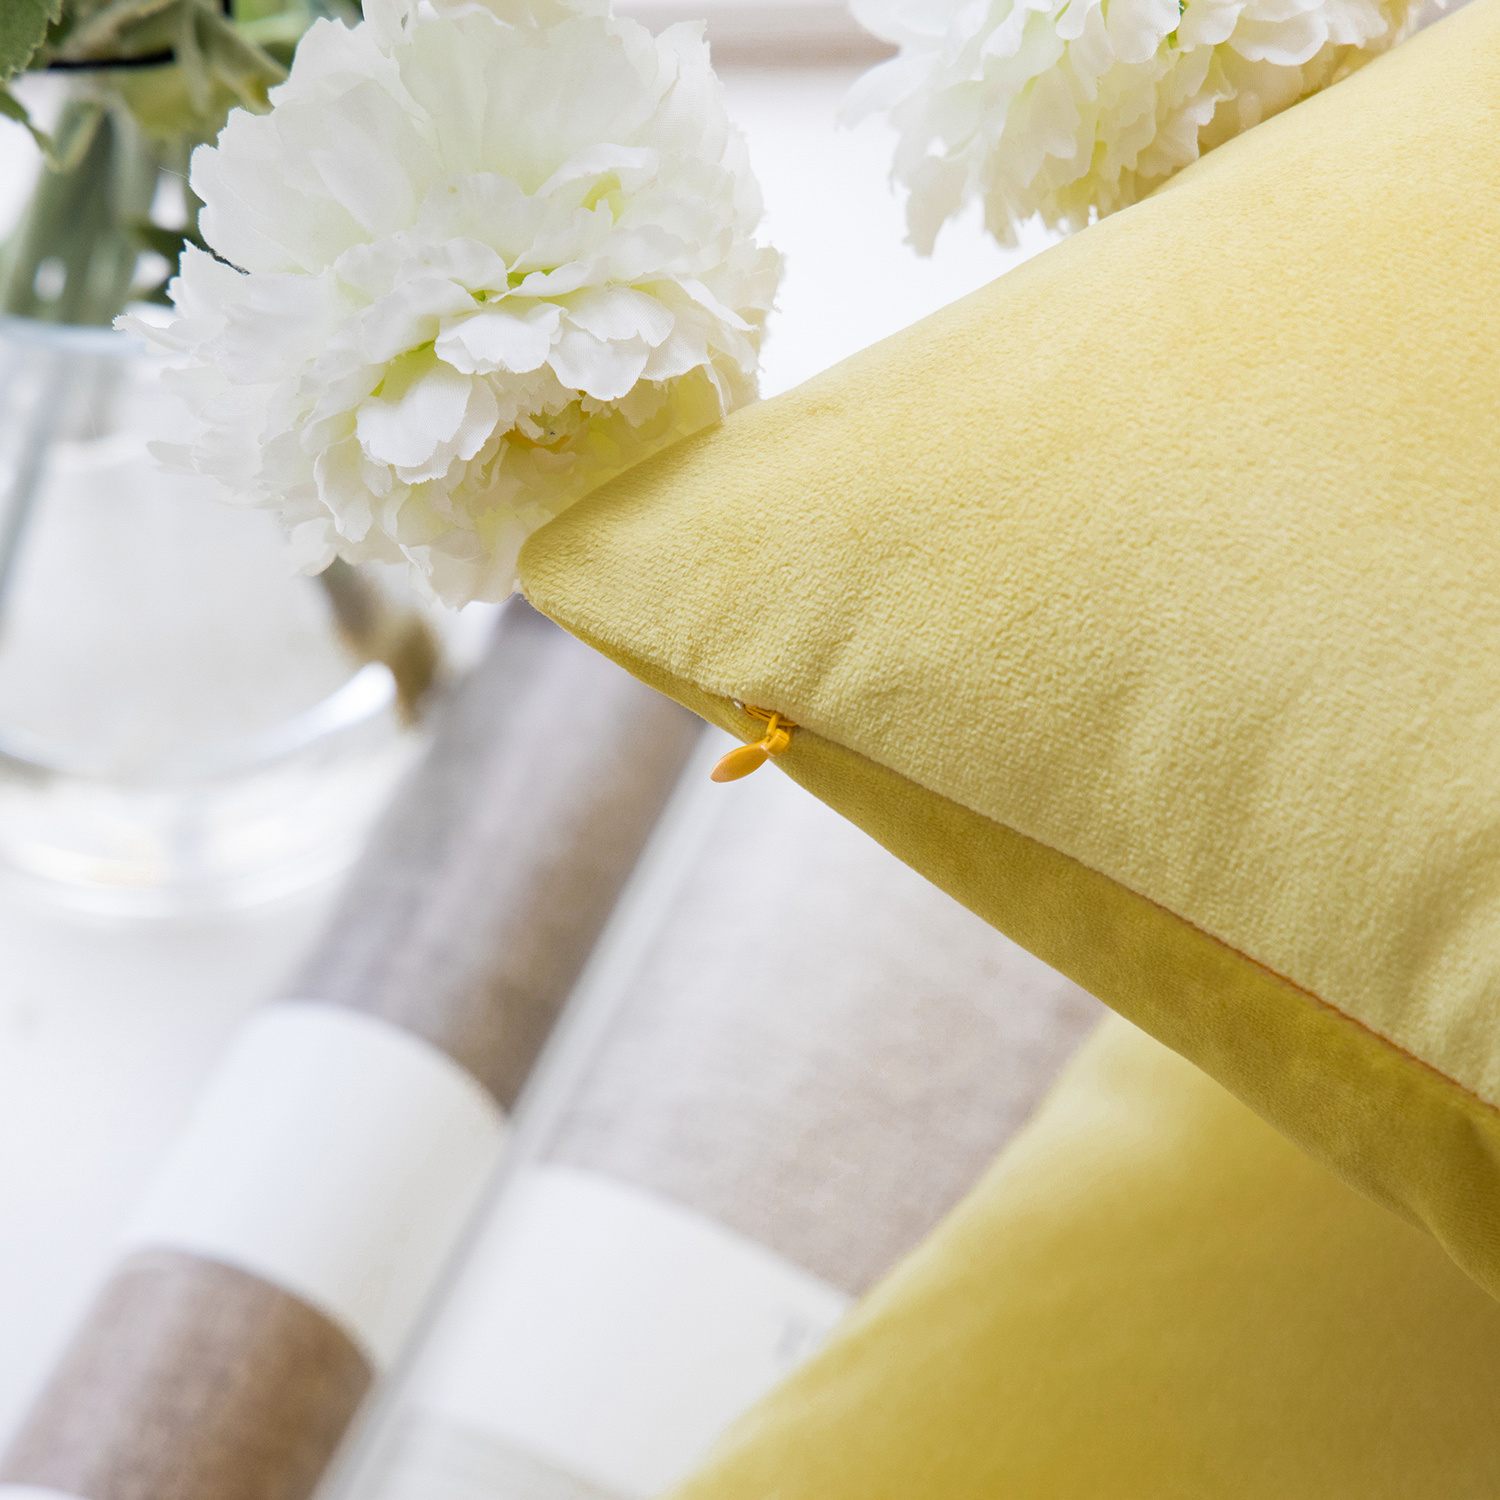 Phantoscope Soft Silky Velvet Series Decorative Throw Pillow, 18" x 18", Yellow, 1 Pack - image 5 of 7